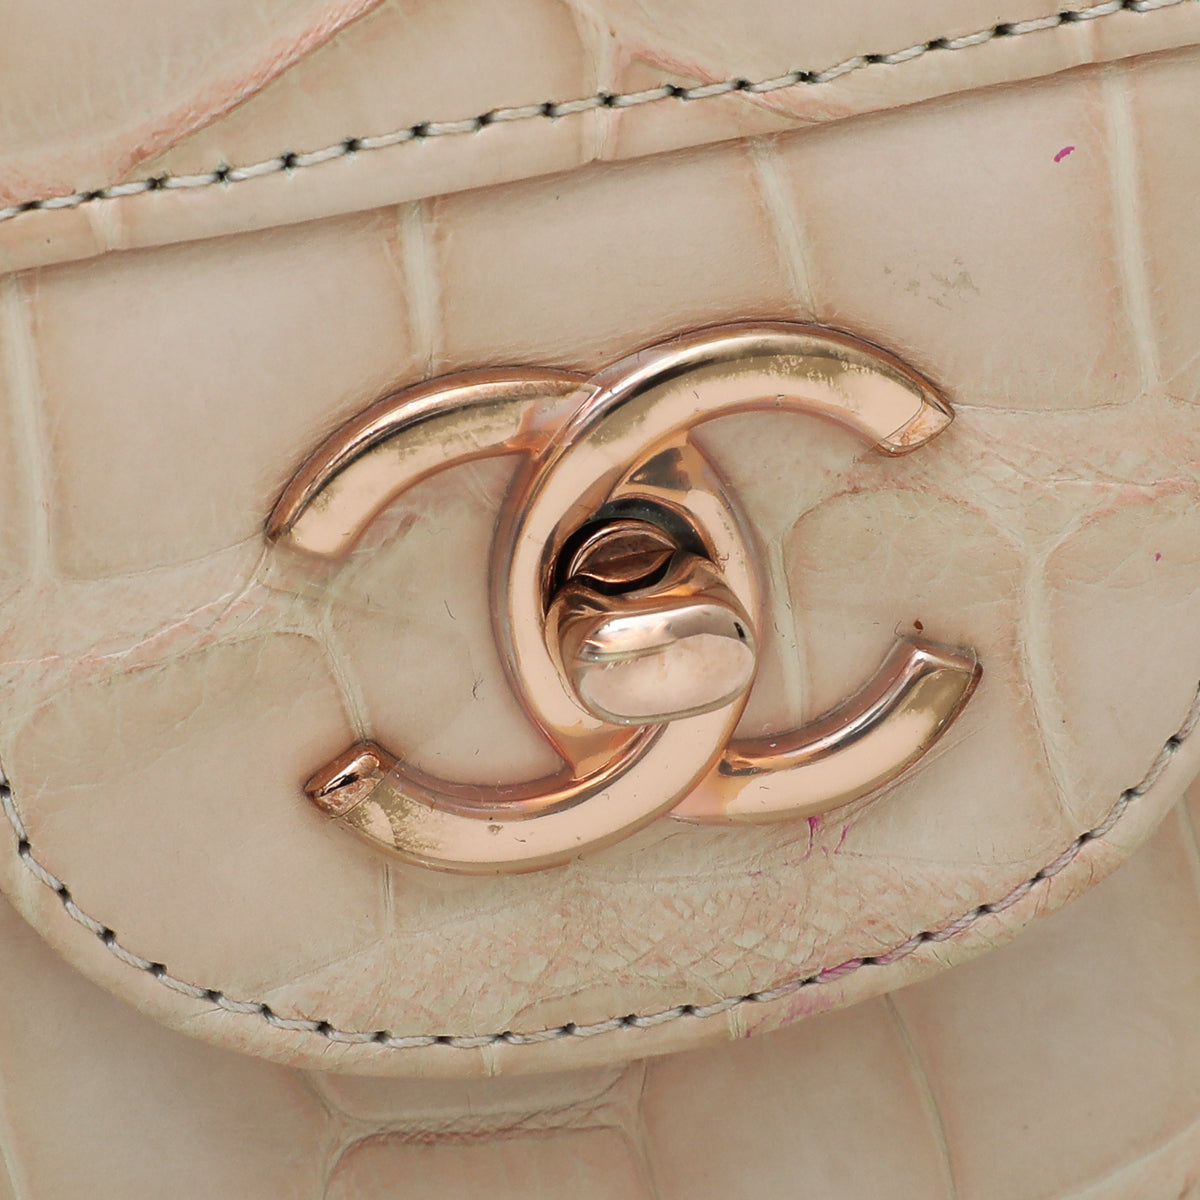 Chanel Hot Pink Alligator Jumbo Double Flap Bag No. 22586821 at